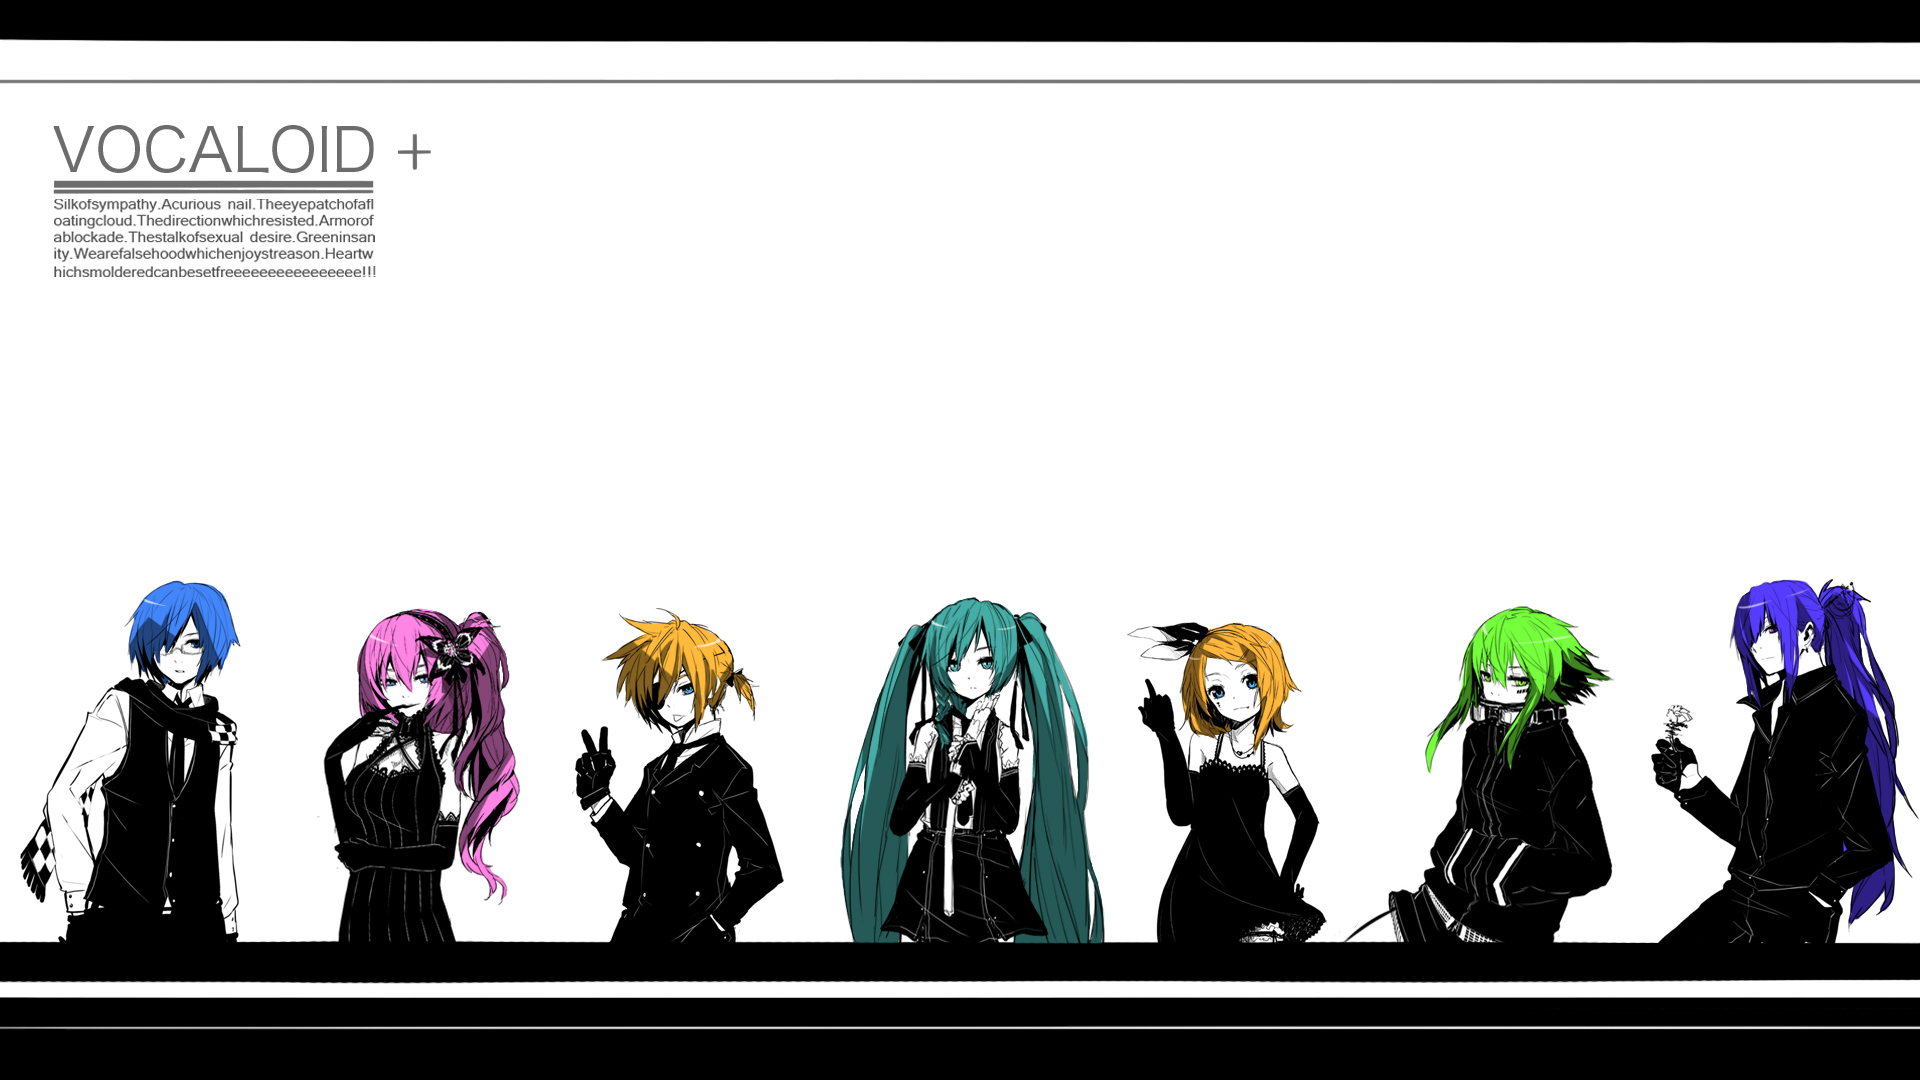 gumi, Hatsune, Miku, Kagamine, Len, Kagamine, Rin, Kaito, Kamui, Gakupo, Megurine, Luka, Meiko, Tokiti, Vocaloid Wallpaper